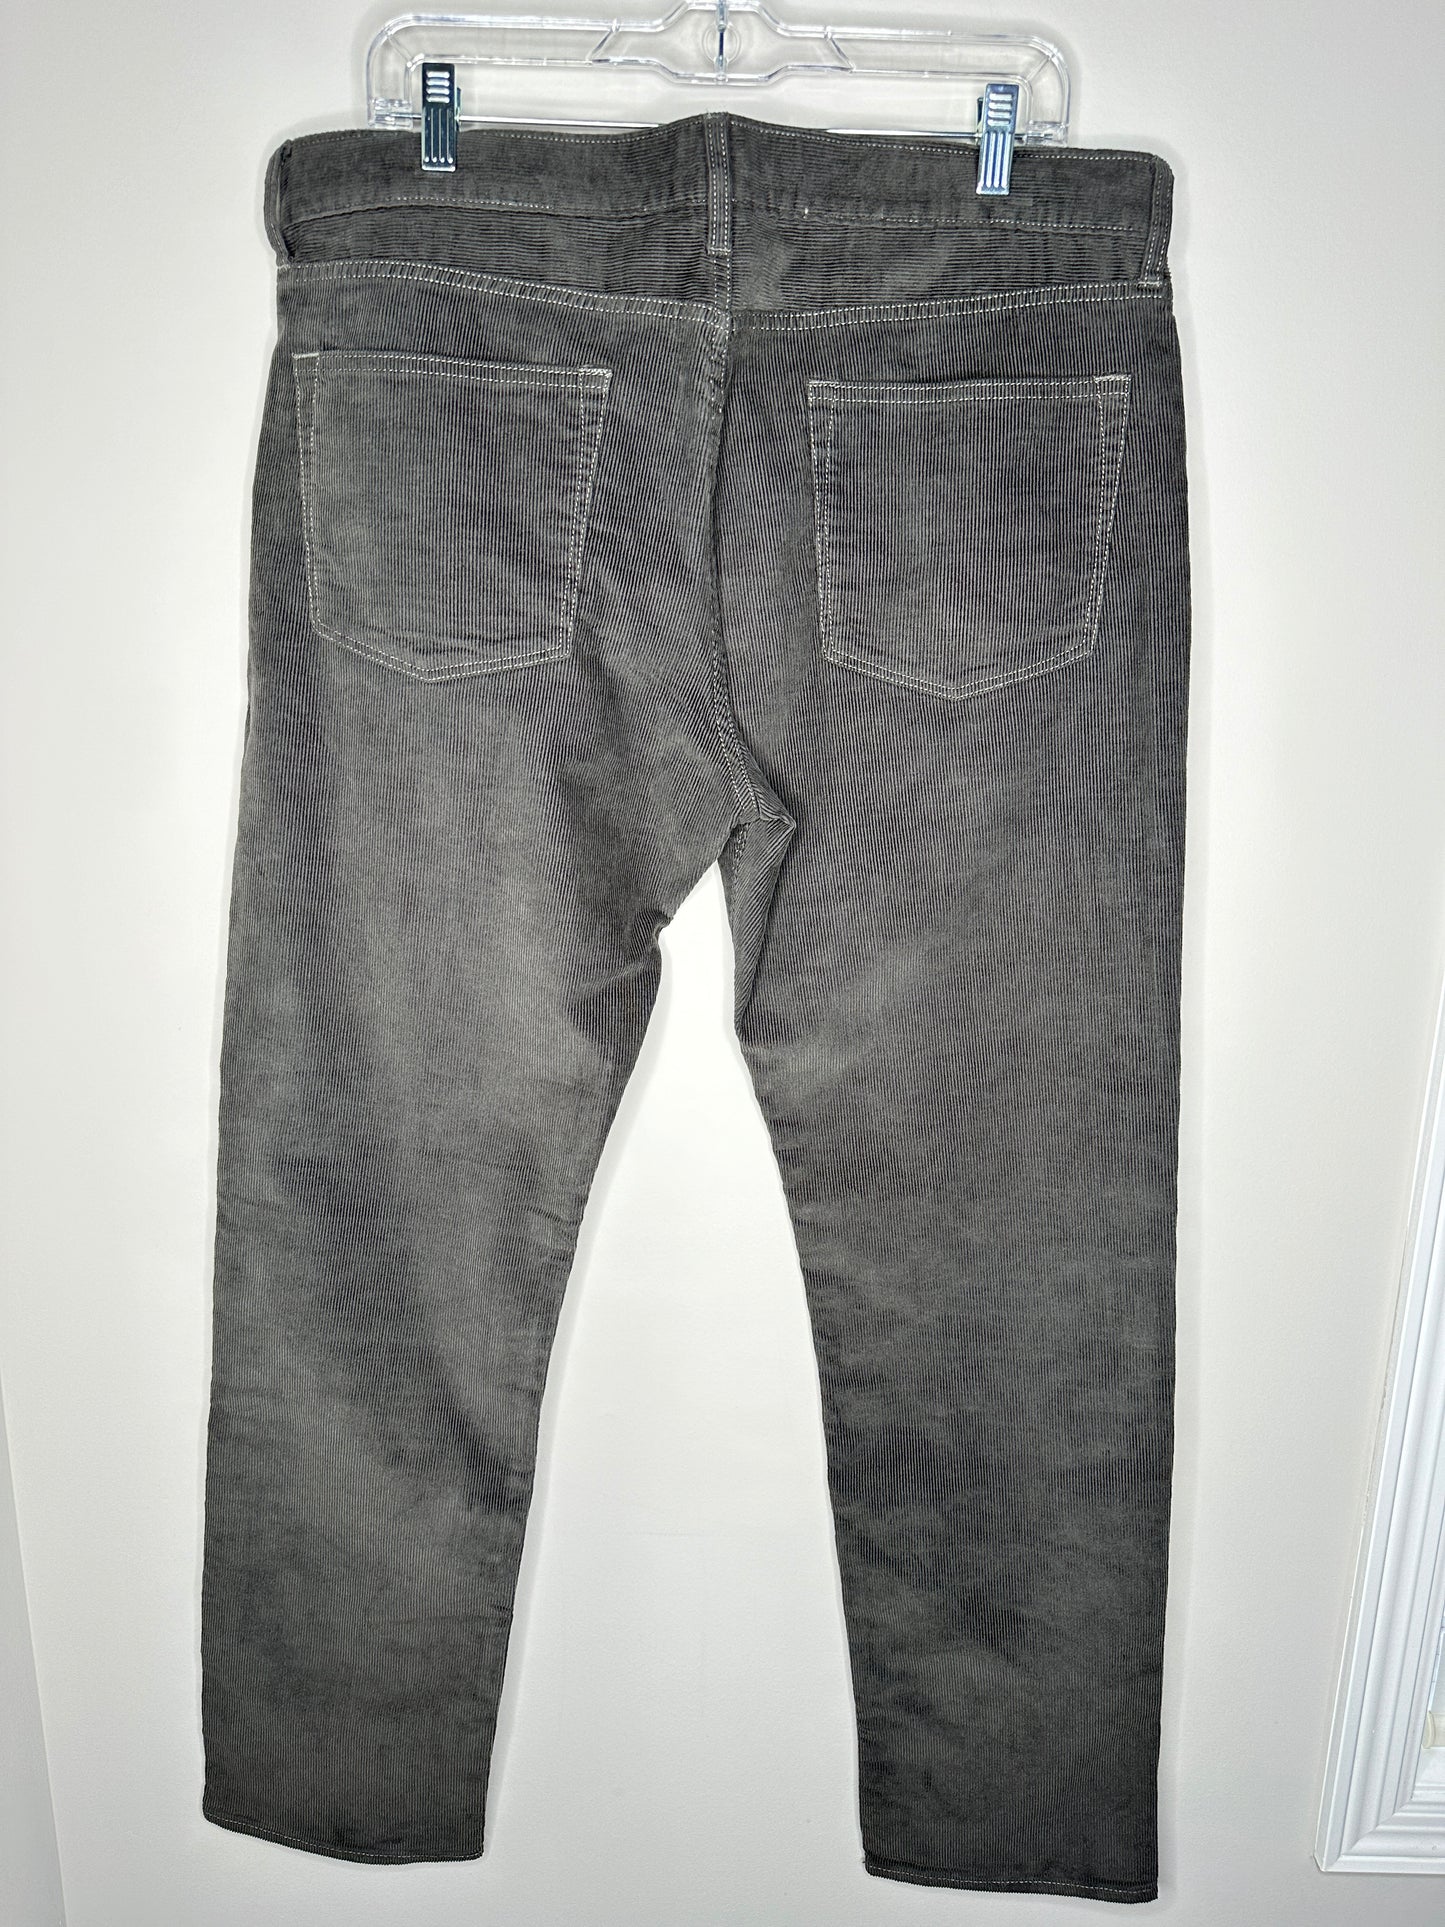 J.Crew Men's Size 35x32 (marked) Gray Corduroy Pants